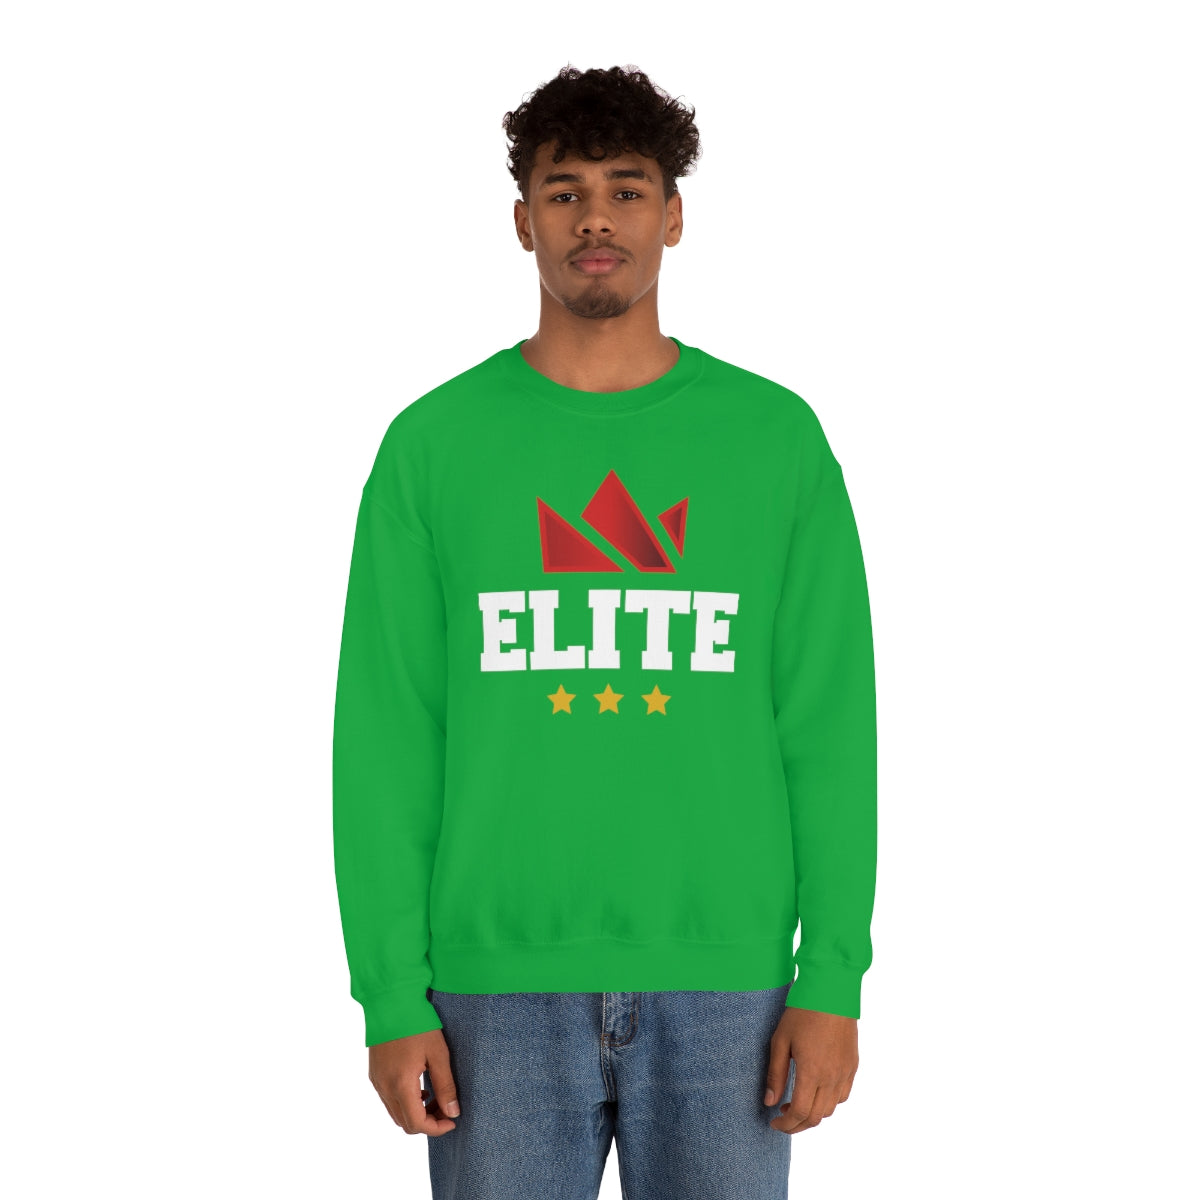 EliteTeam.Tv Unisex Sweatshirt